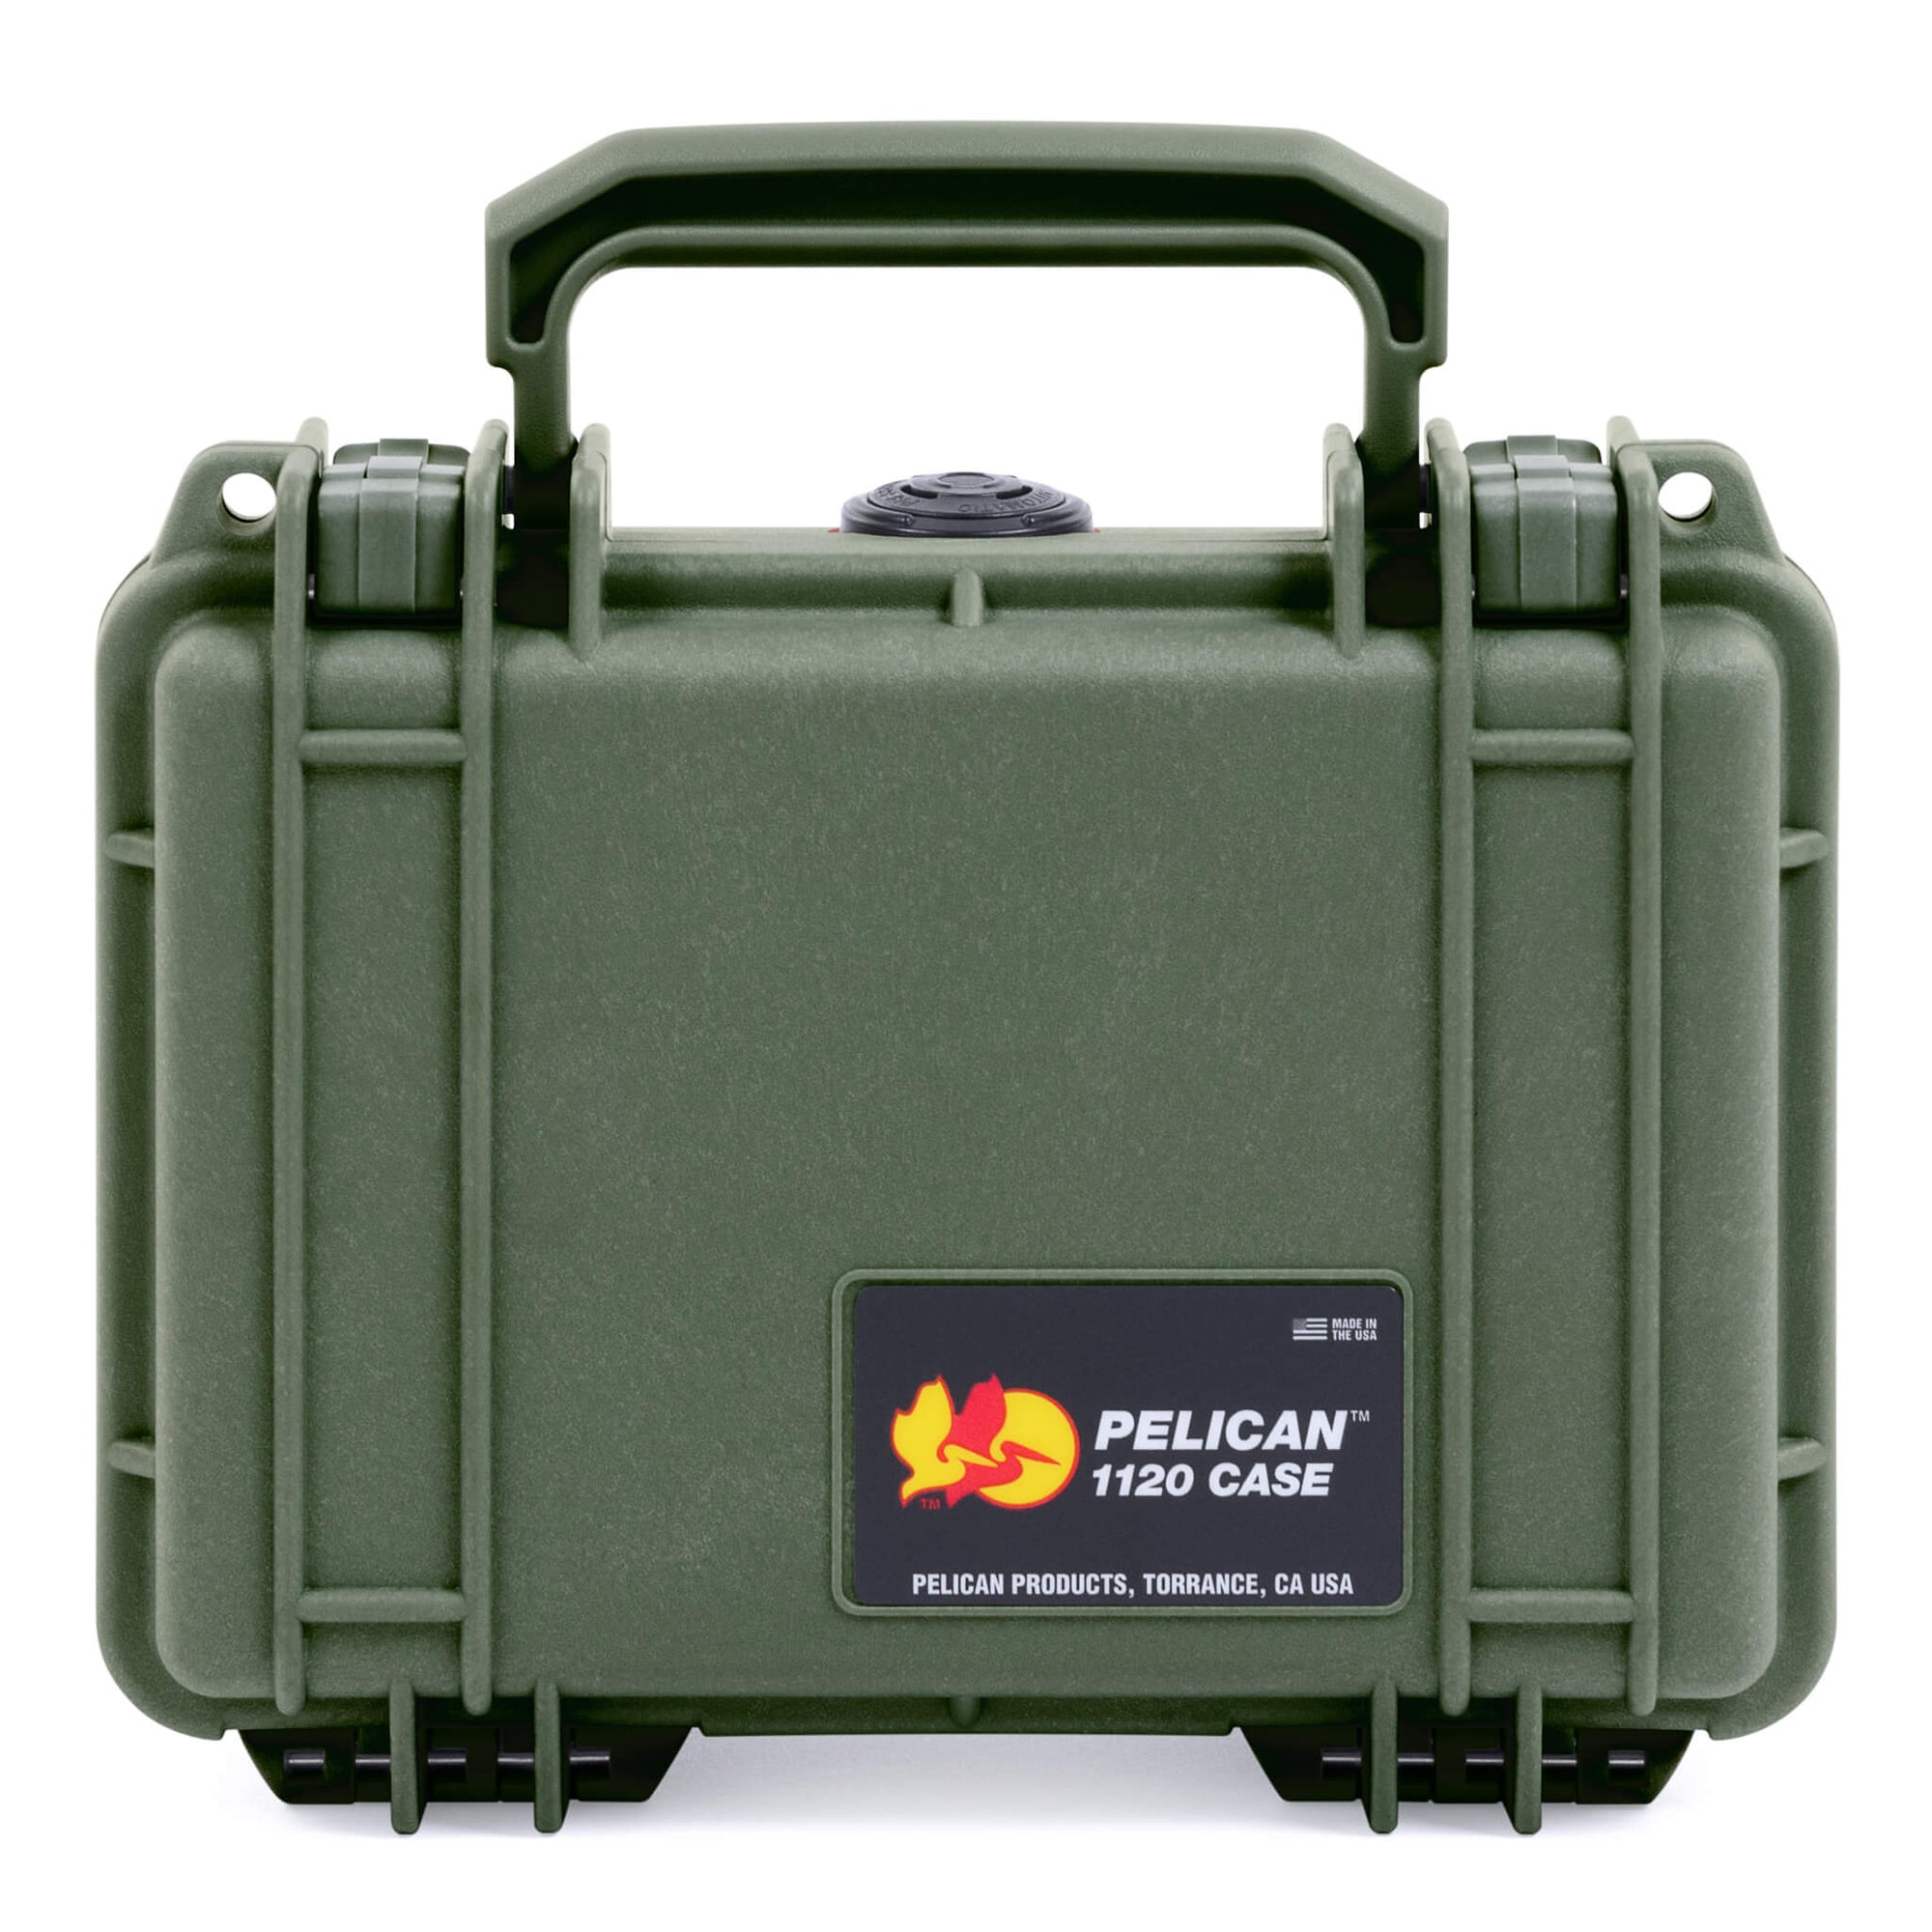 Pelican 1120 Case, OD Green ColorCase 